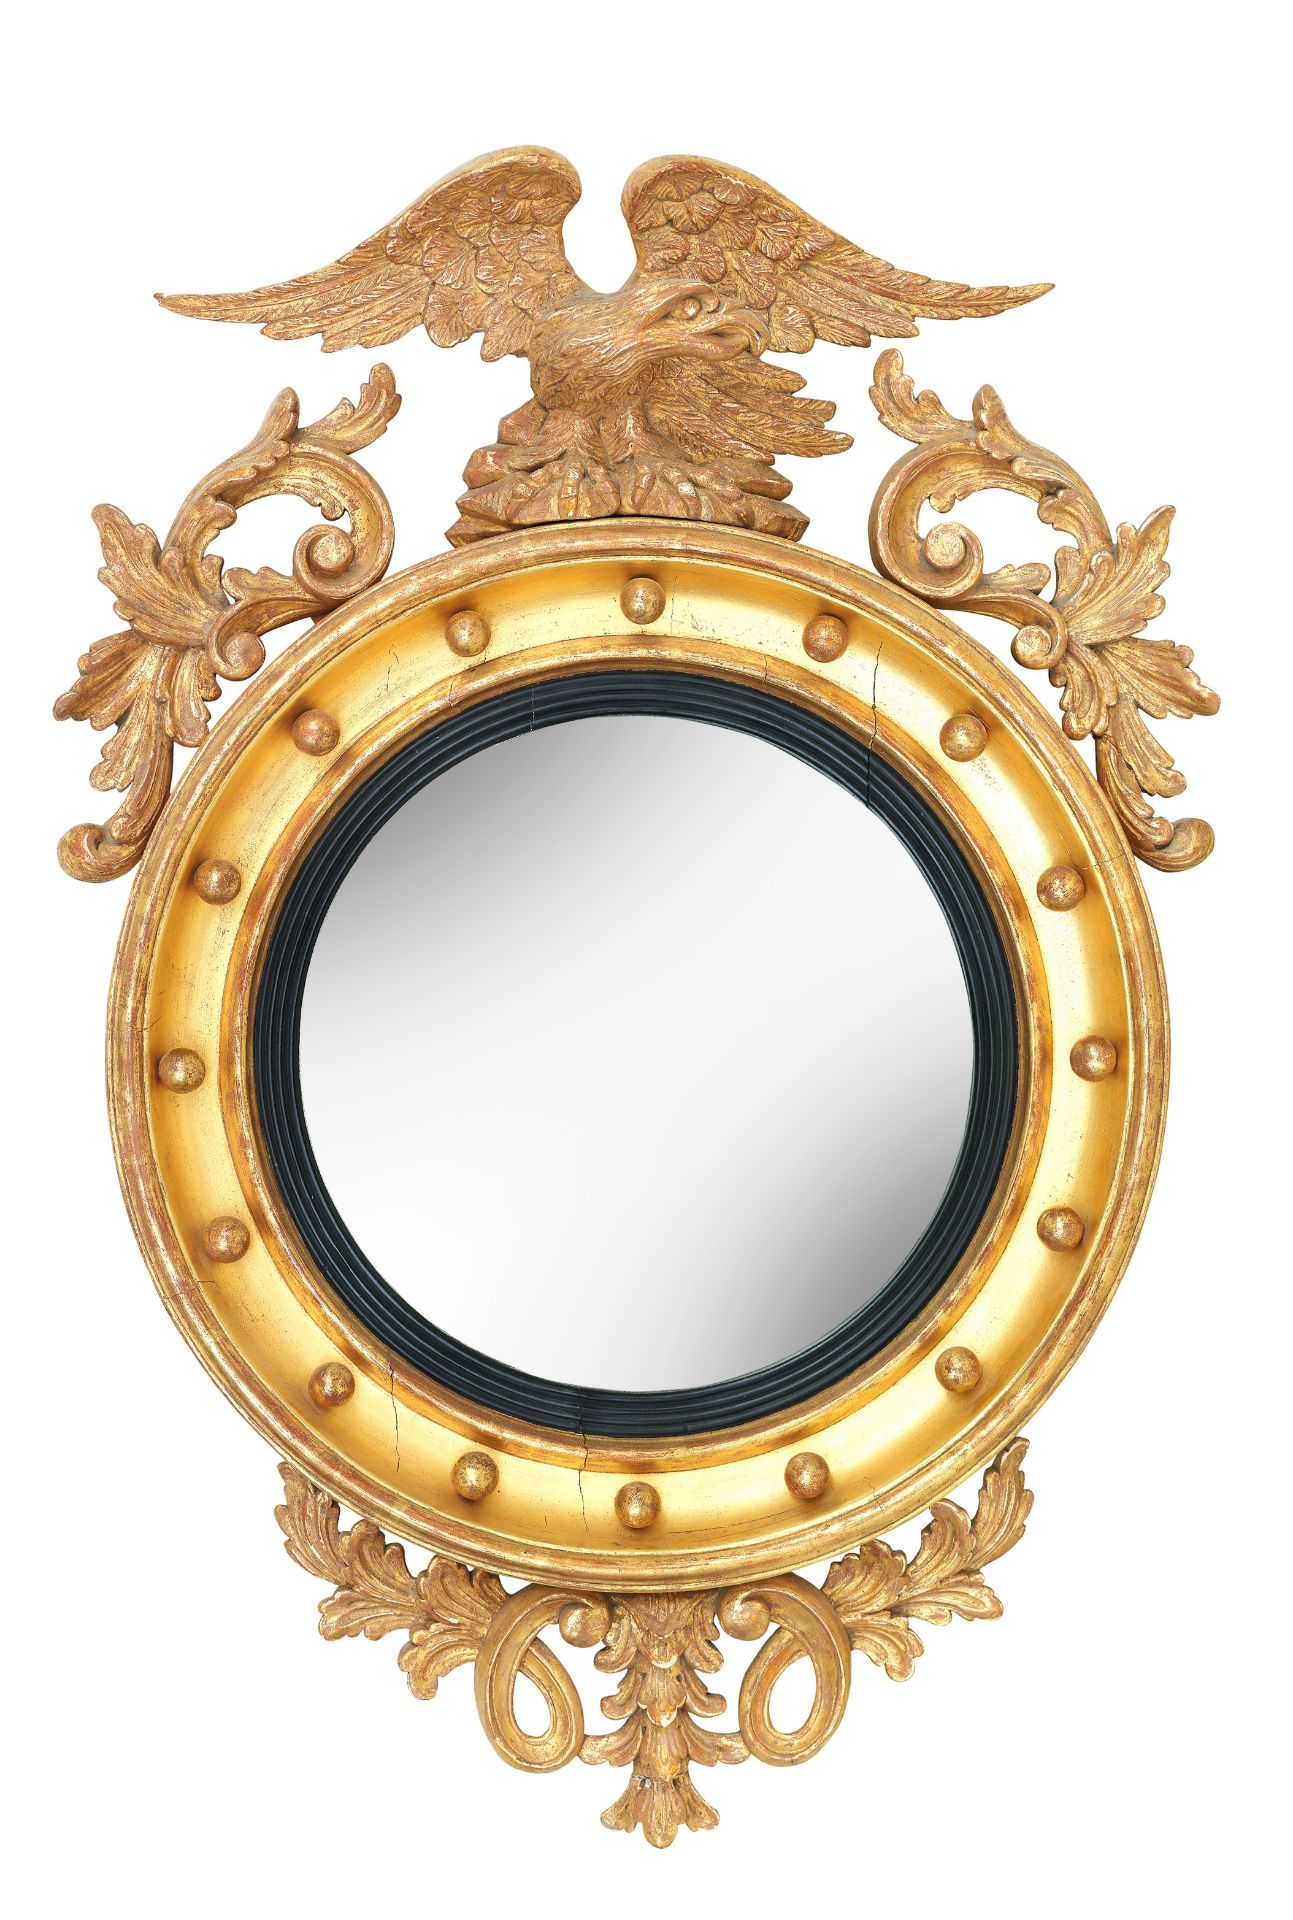 A 19th century giltwood convex mirror